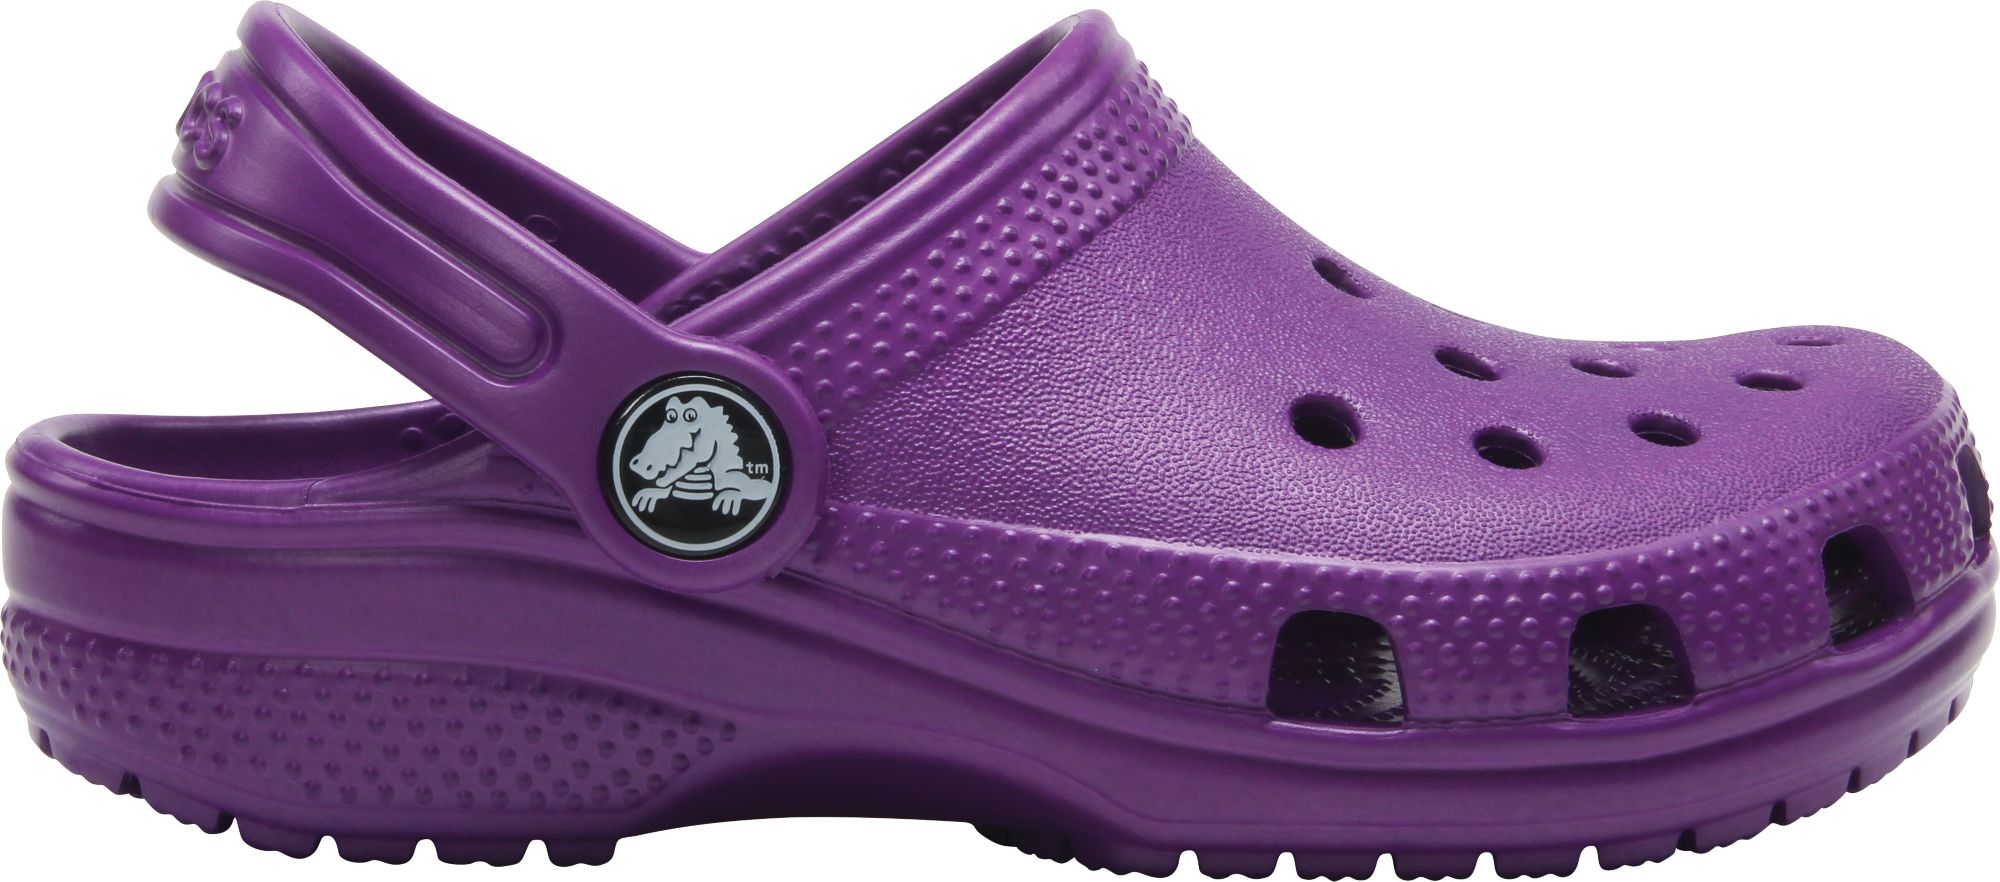 purple crocs for kids